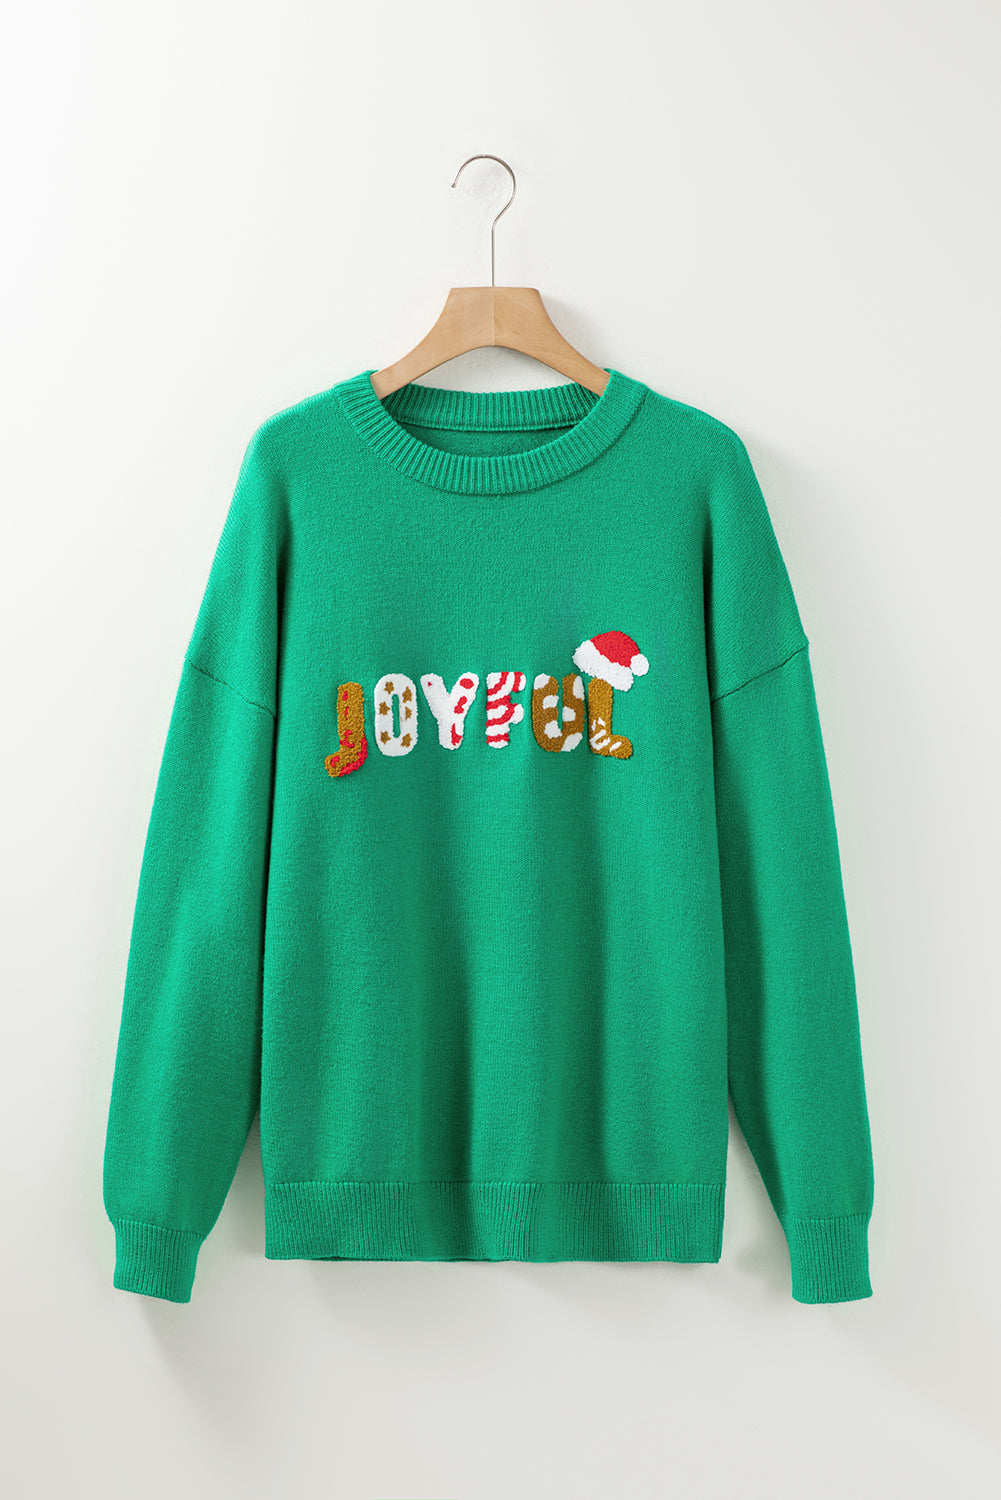 Bright Green Sequined JOYFUL Graphic Christmas Sweater